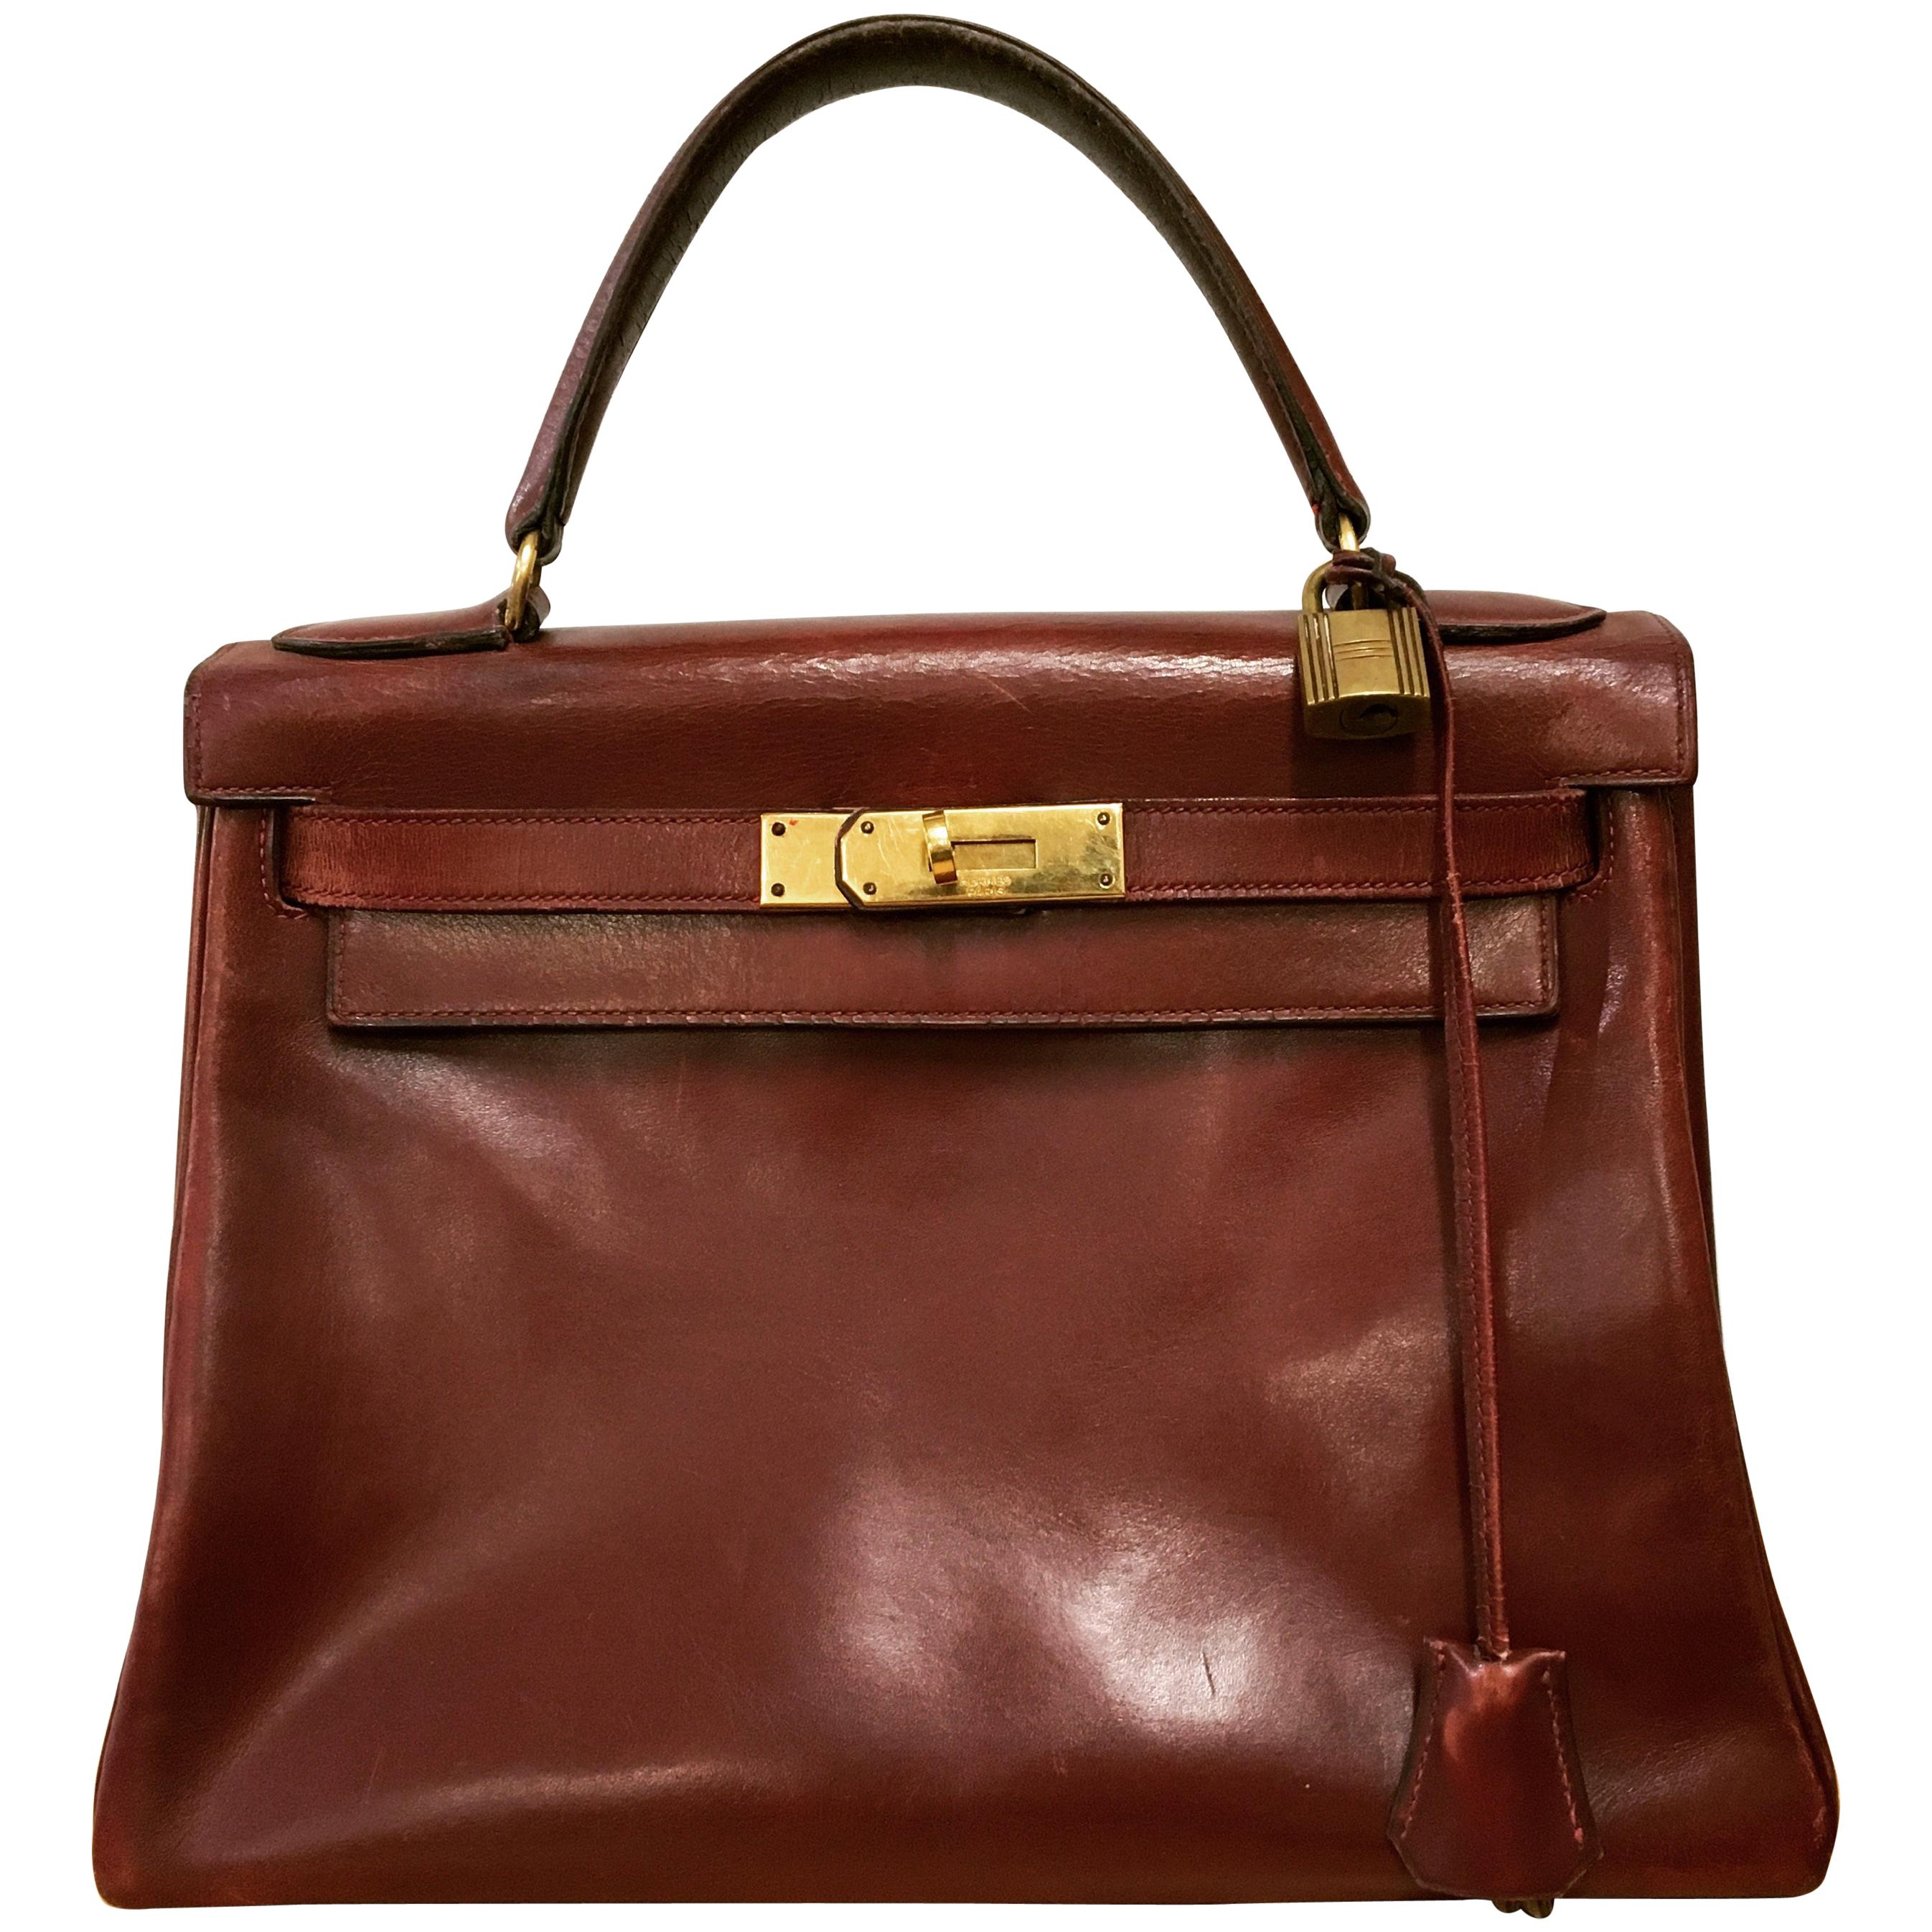  Hermès vintage 1950's marron/ burgundy leather Kelly bag.